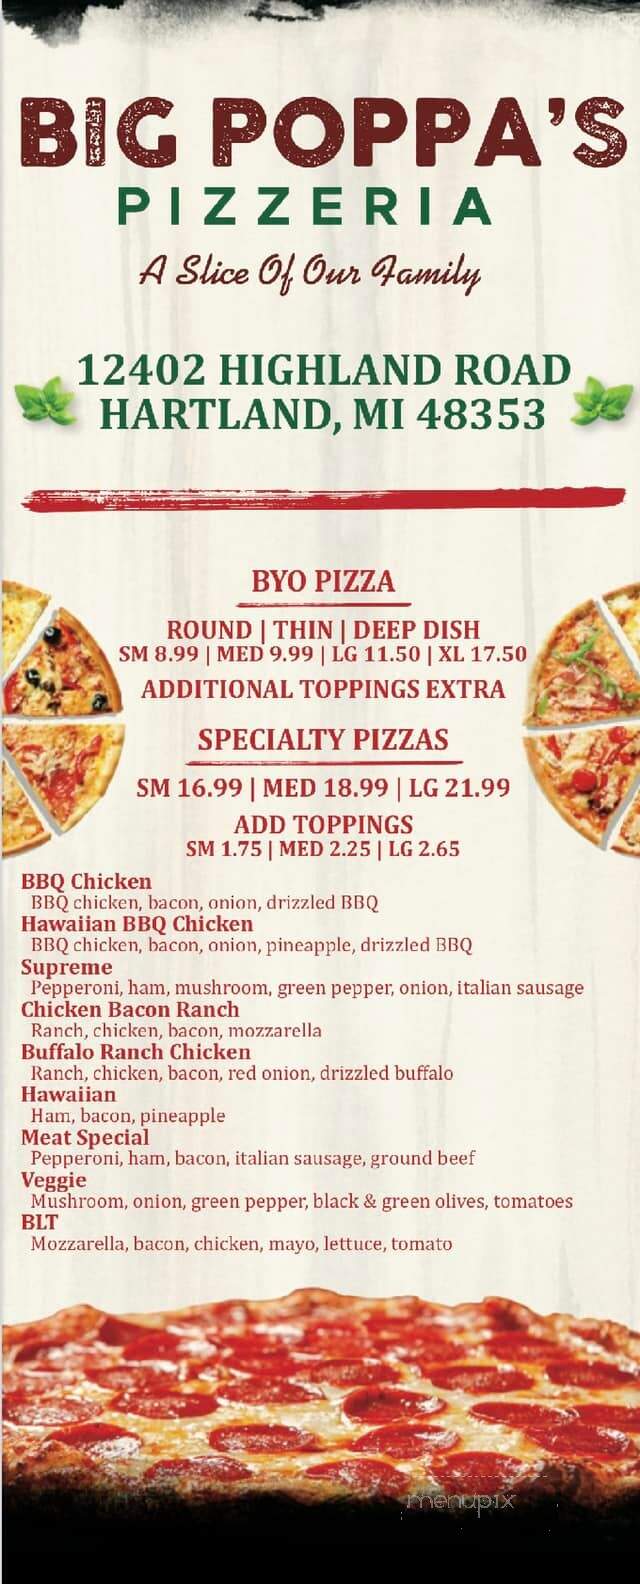 Big Poppa's Pizzeria - Hartland, MI